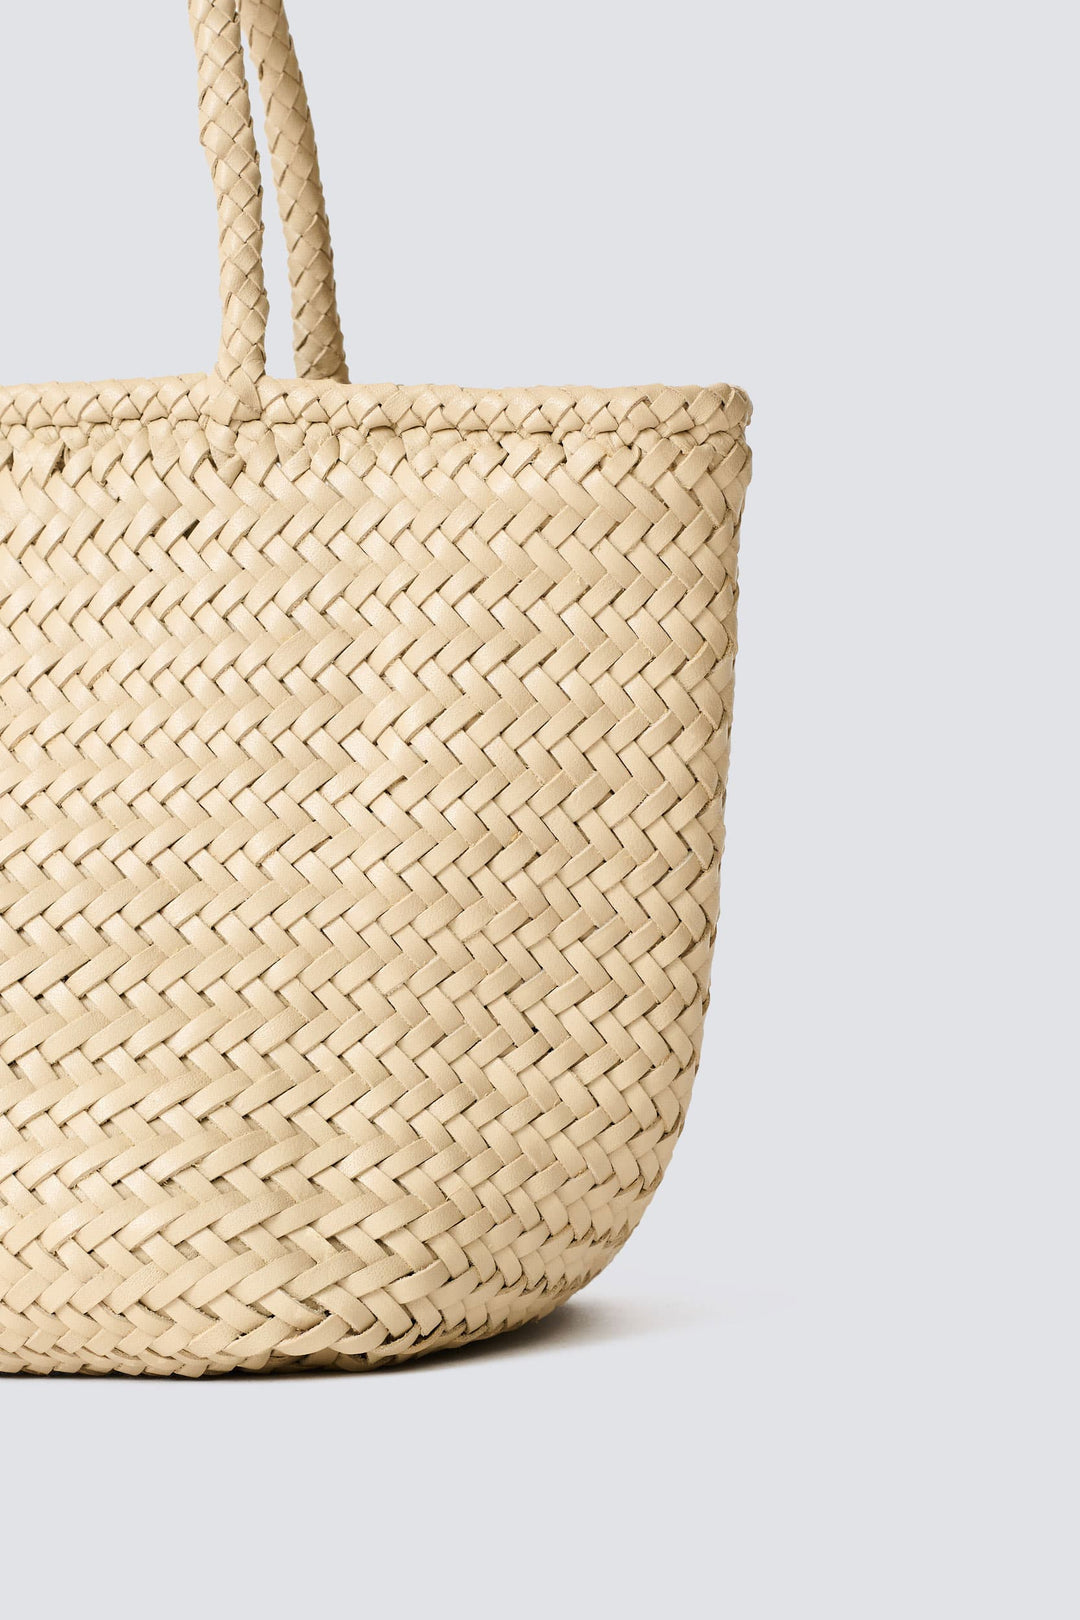 Dragon Diffusion woven leather bag handmade - Grace Basket Small Pearl